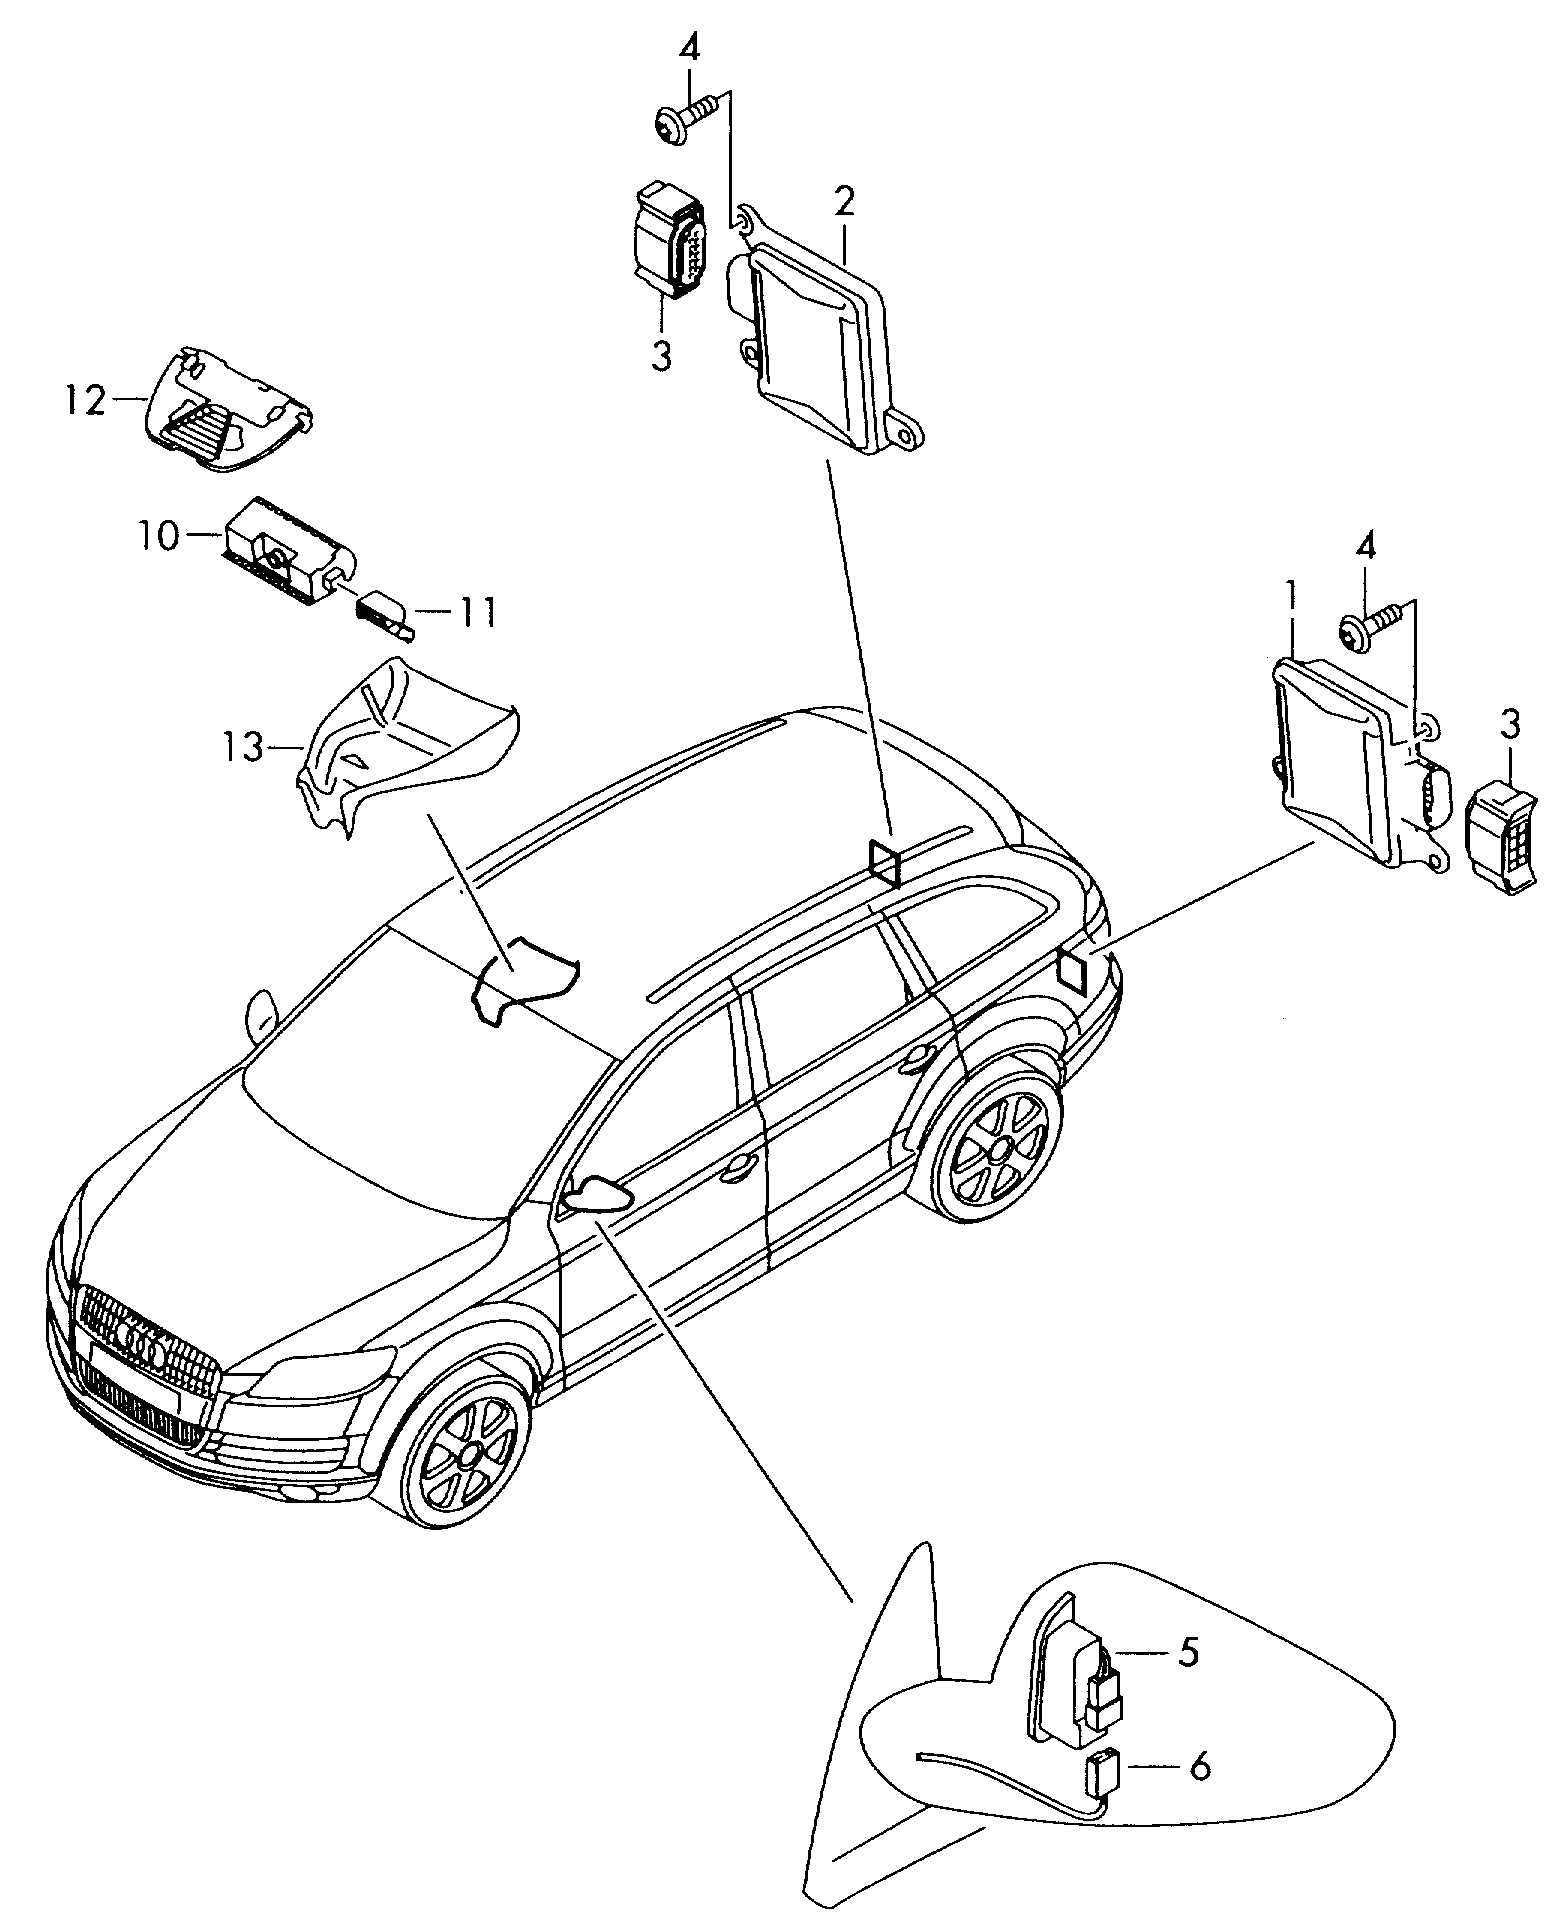 control unit for lane guard
system with camera - Audi A6/S6/Avant quattro(A6Q)  